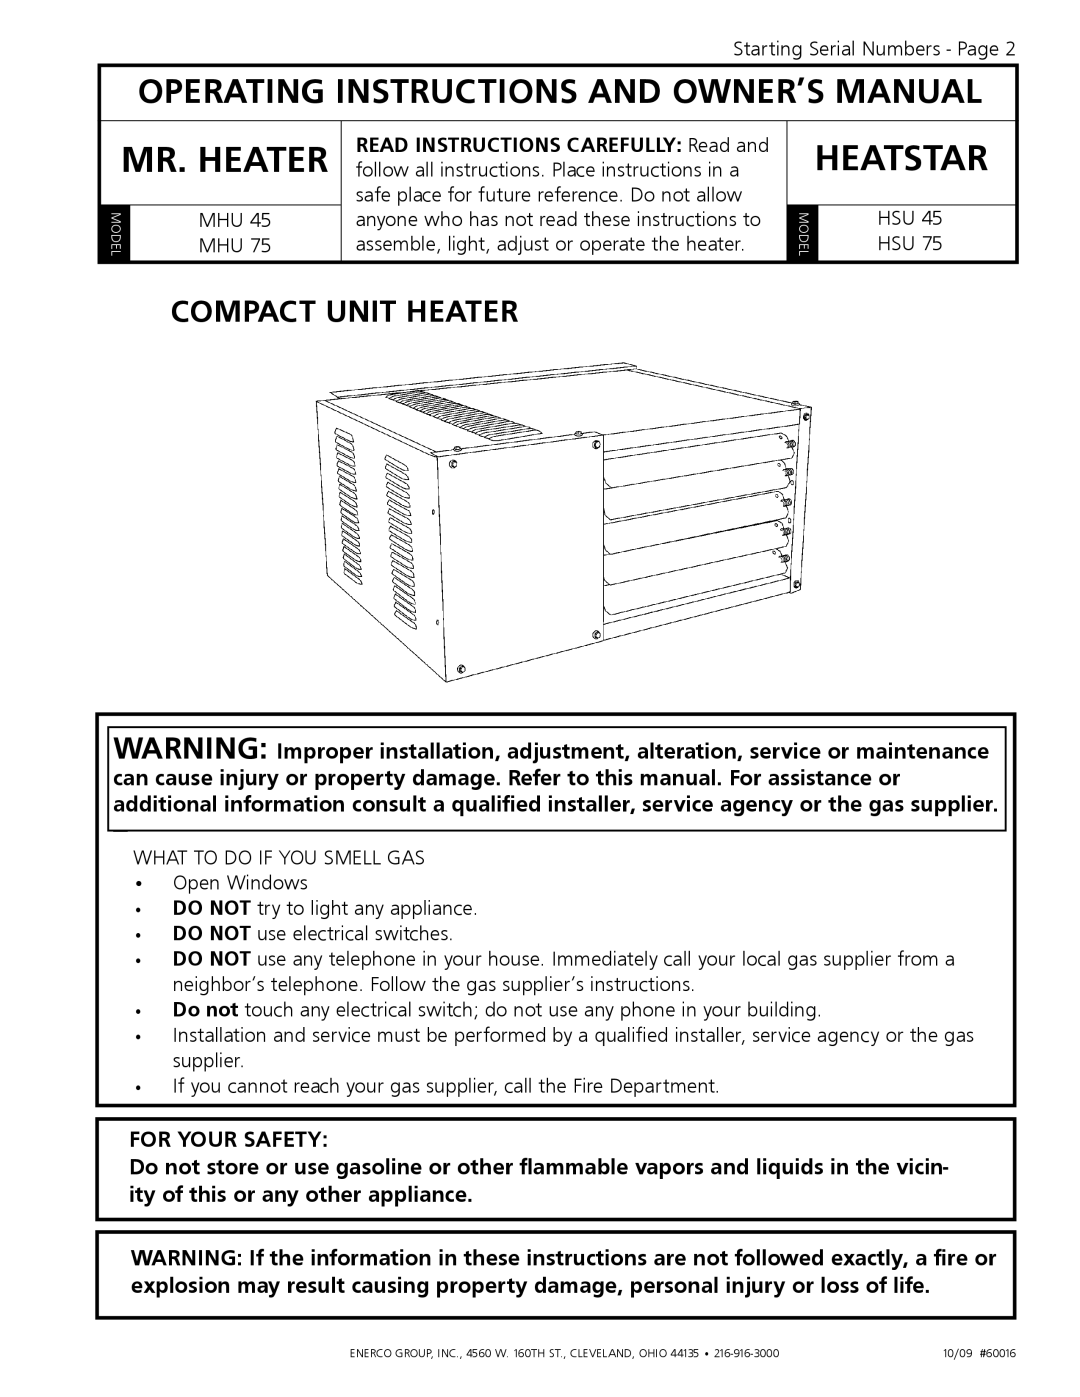 Enerco HSU 45, HSU 75 operating instructions Mr. Heater, Heatstar, Compact Unit Heater 